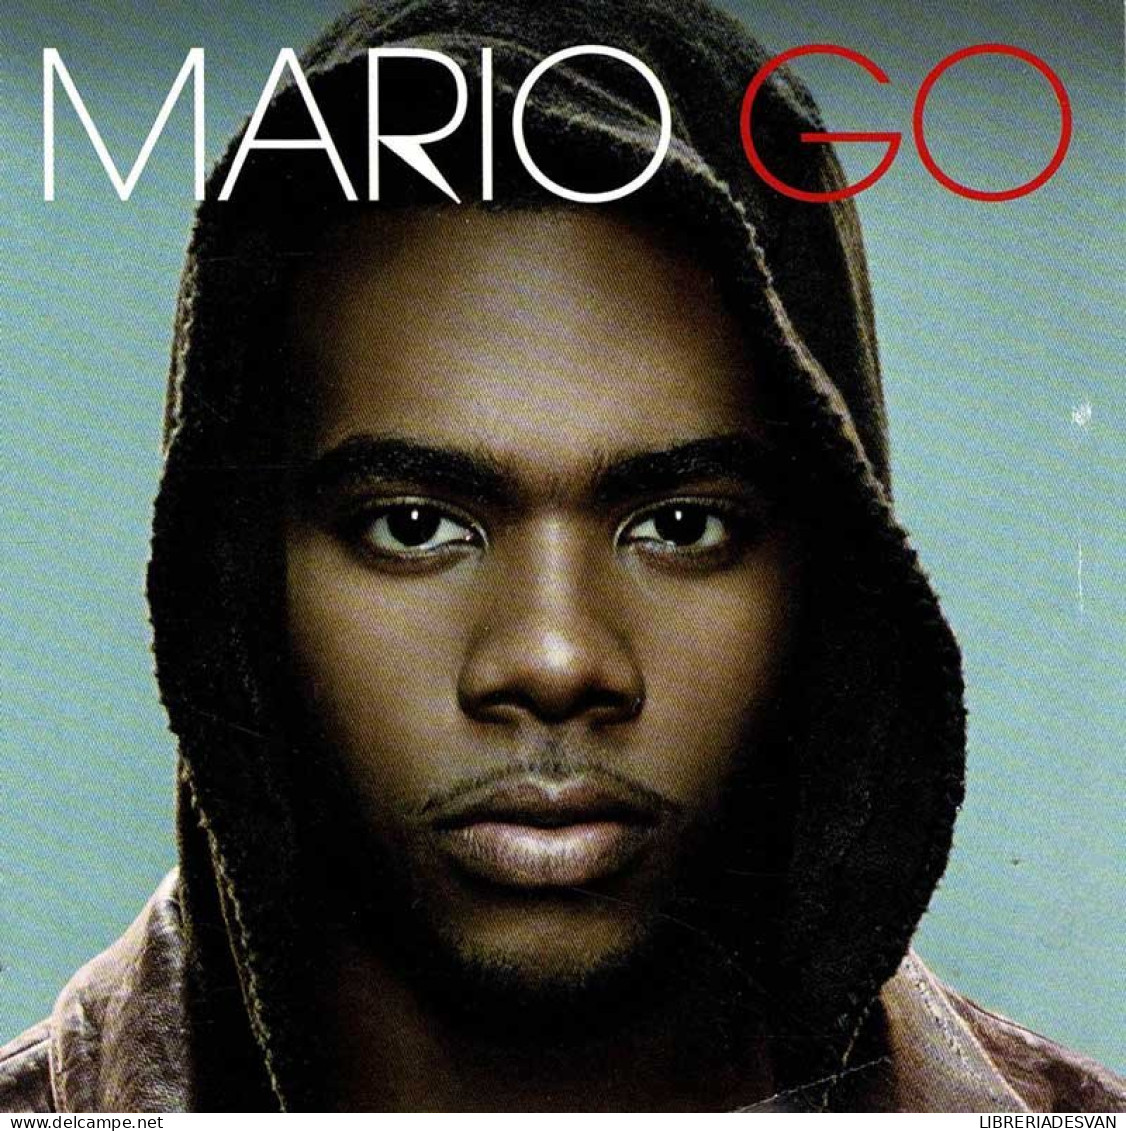 Mario - Go. CD - Jazz